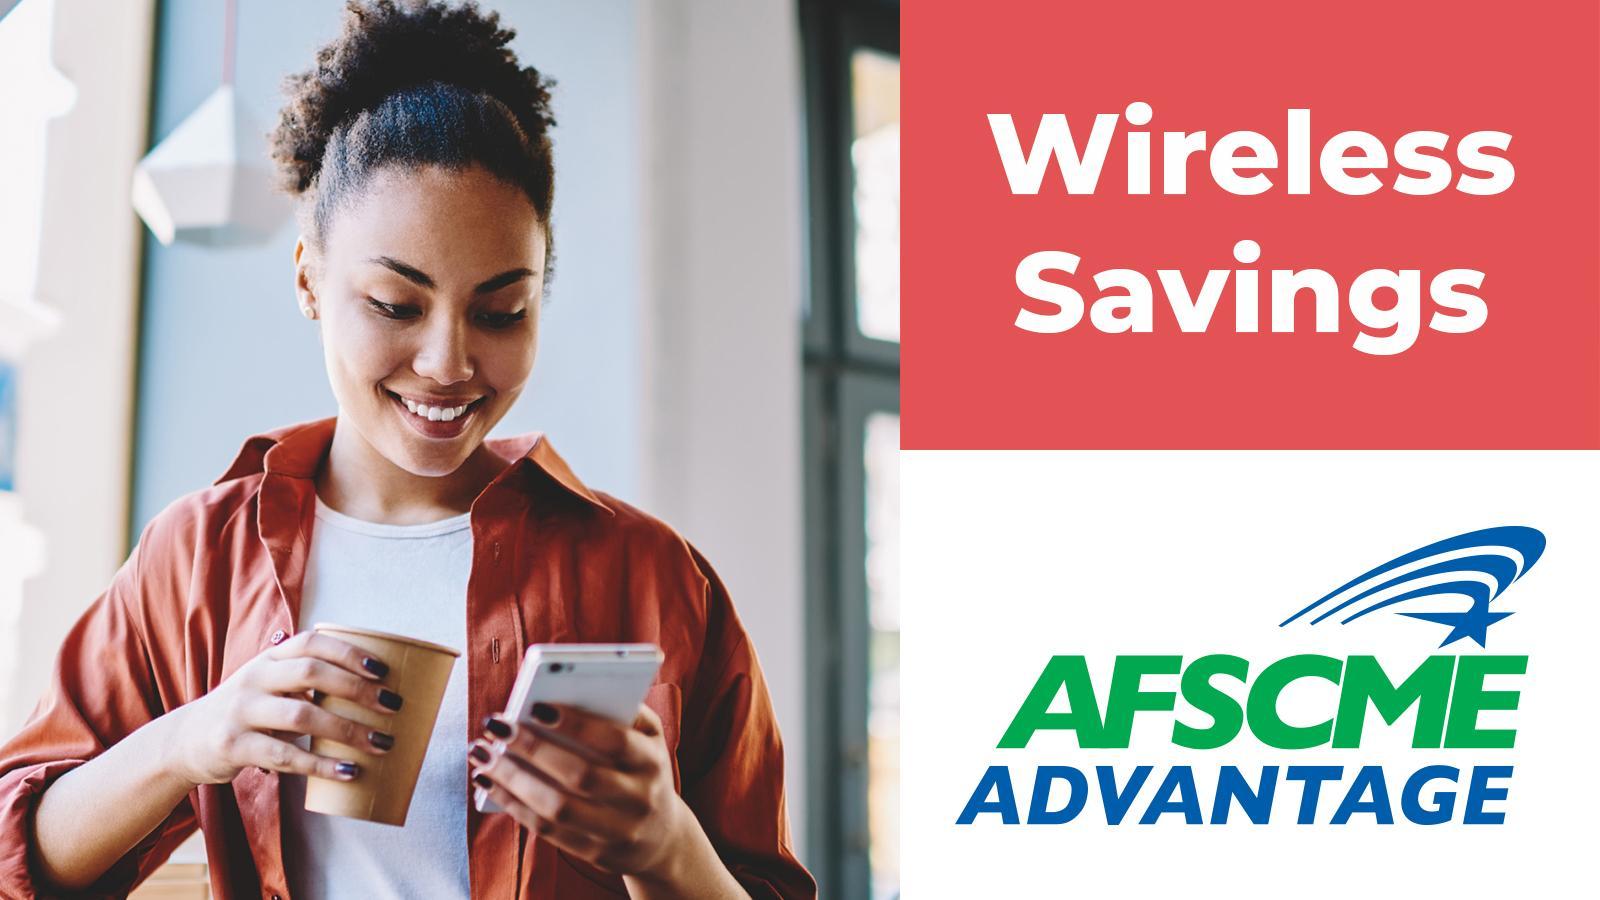 AFSCME Advantage Wireless Savings